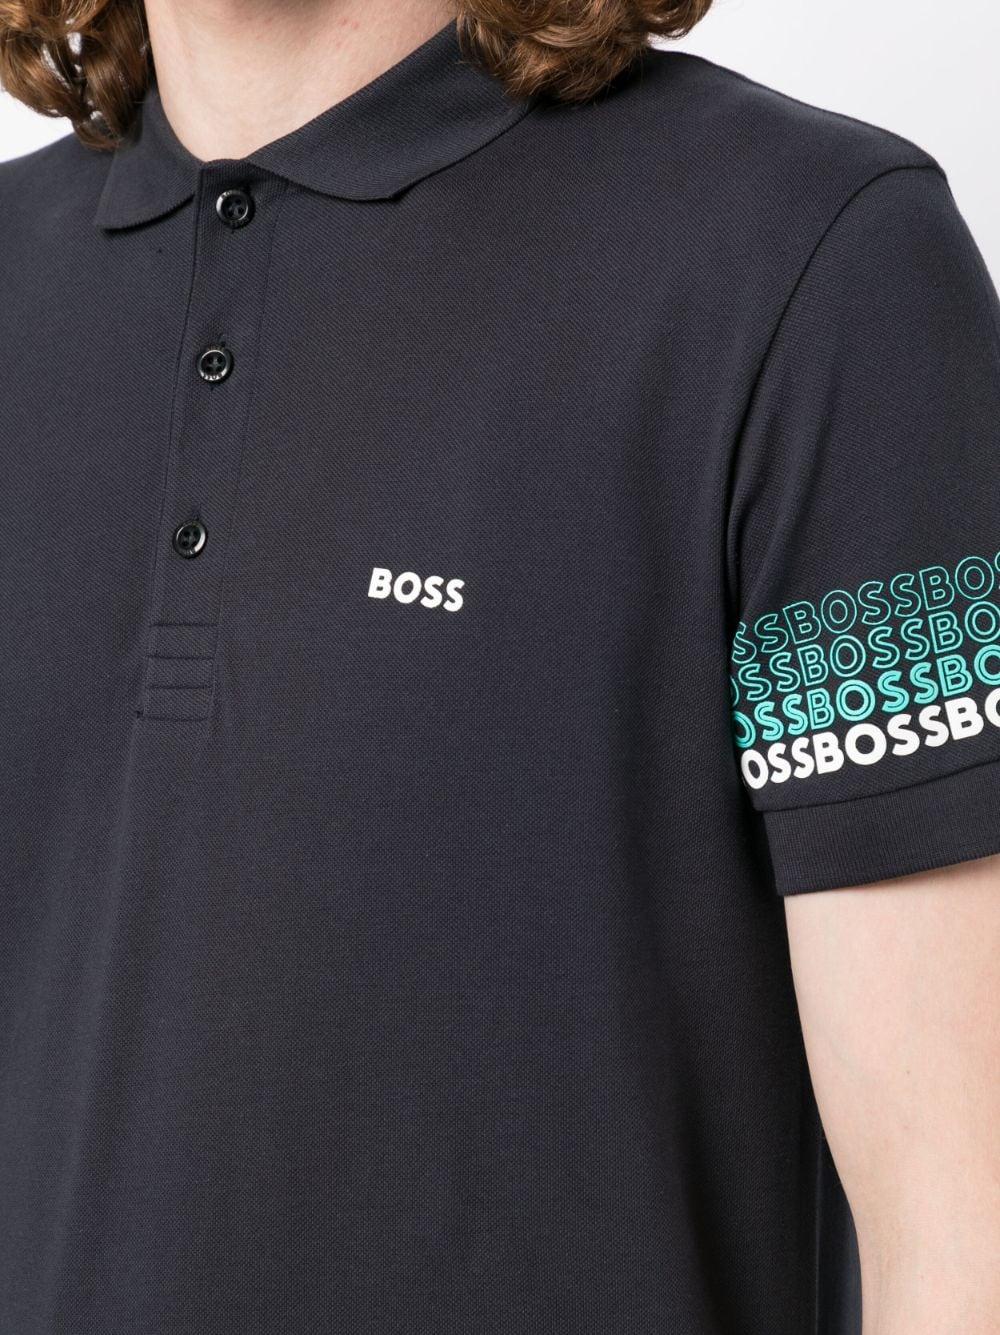 BOSS by HUGO BOSS Paddy 2 Logo -print Polo Shirt in Black for Men | Lyst